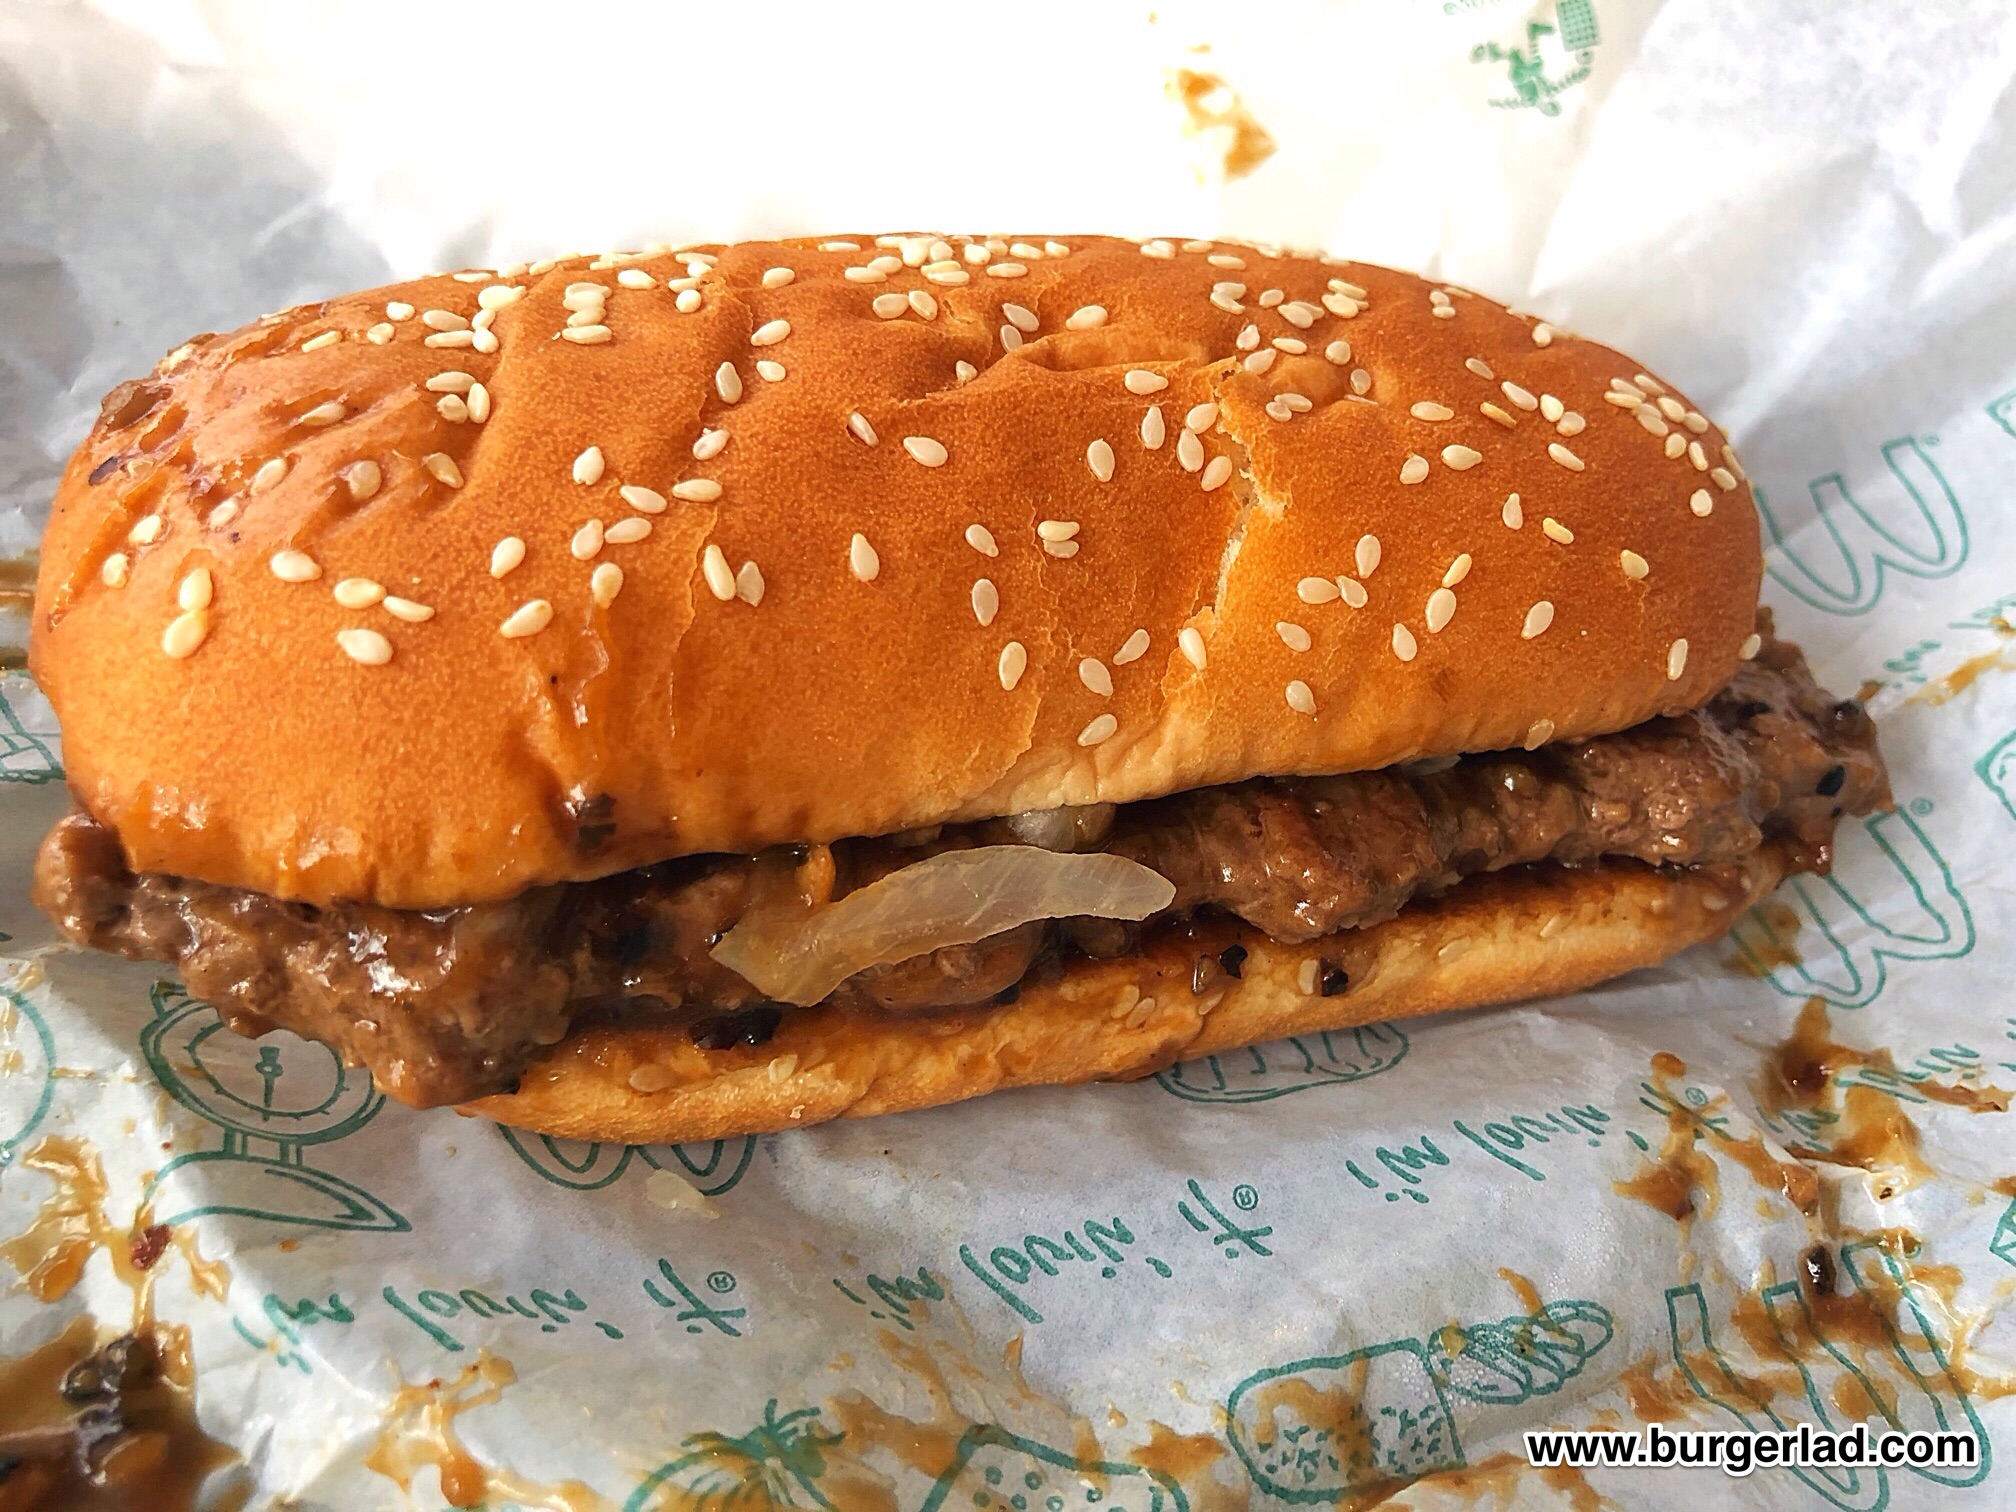 McDonald's Prosperity Burger - Beef